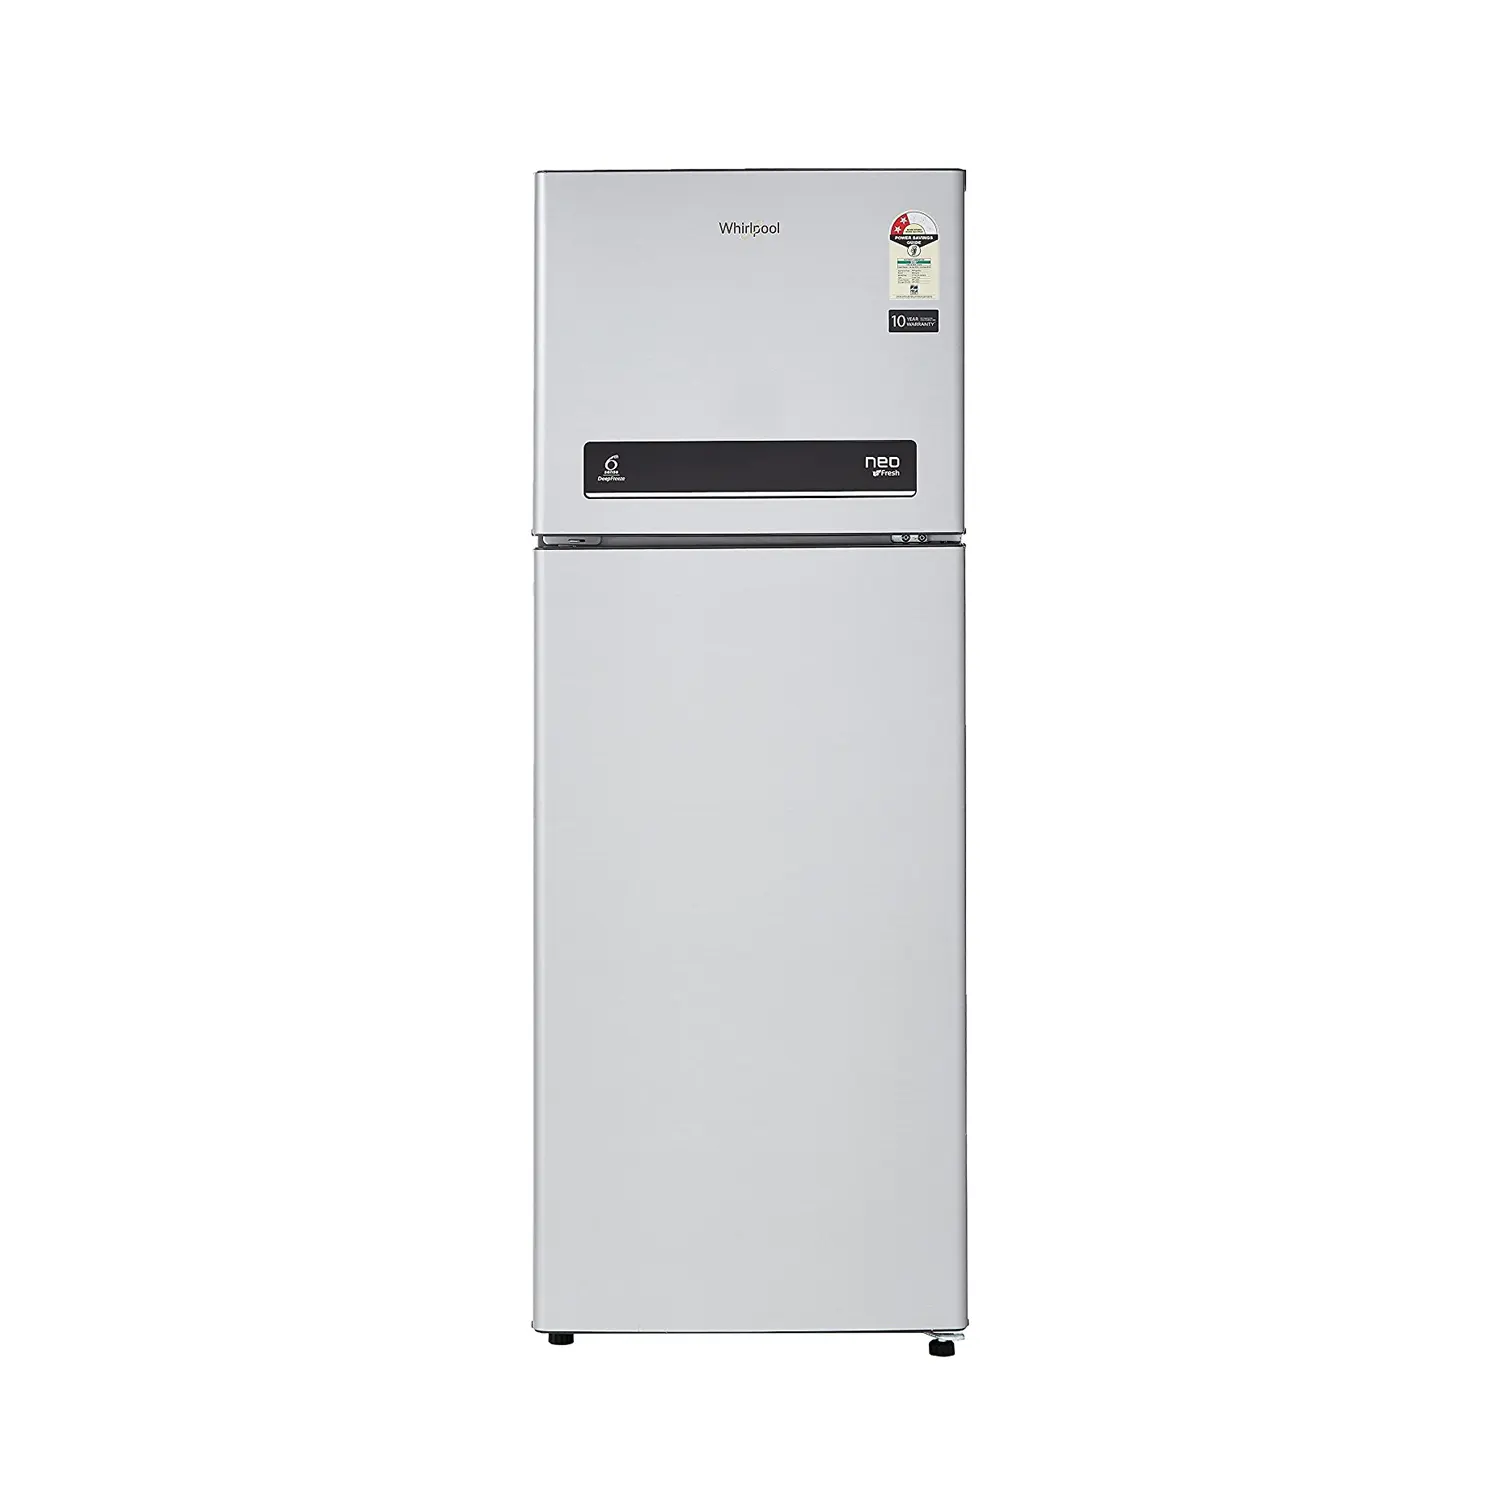  Whirlpool 265 L 2 Star Frost-Free Double-Door Refrigerator (NEO DF278 PRM, Galaxy Steel)